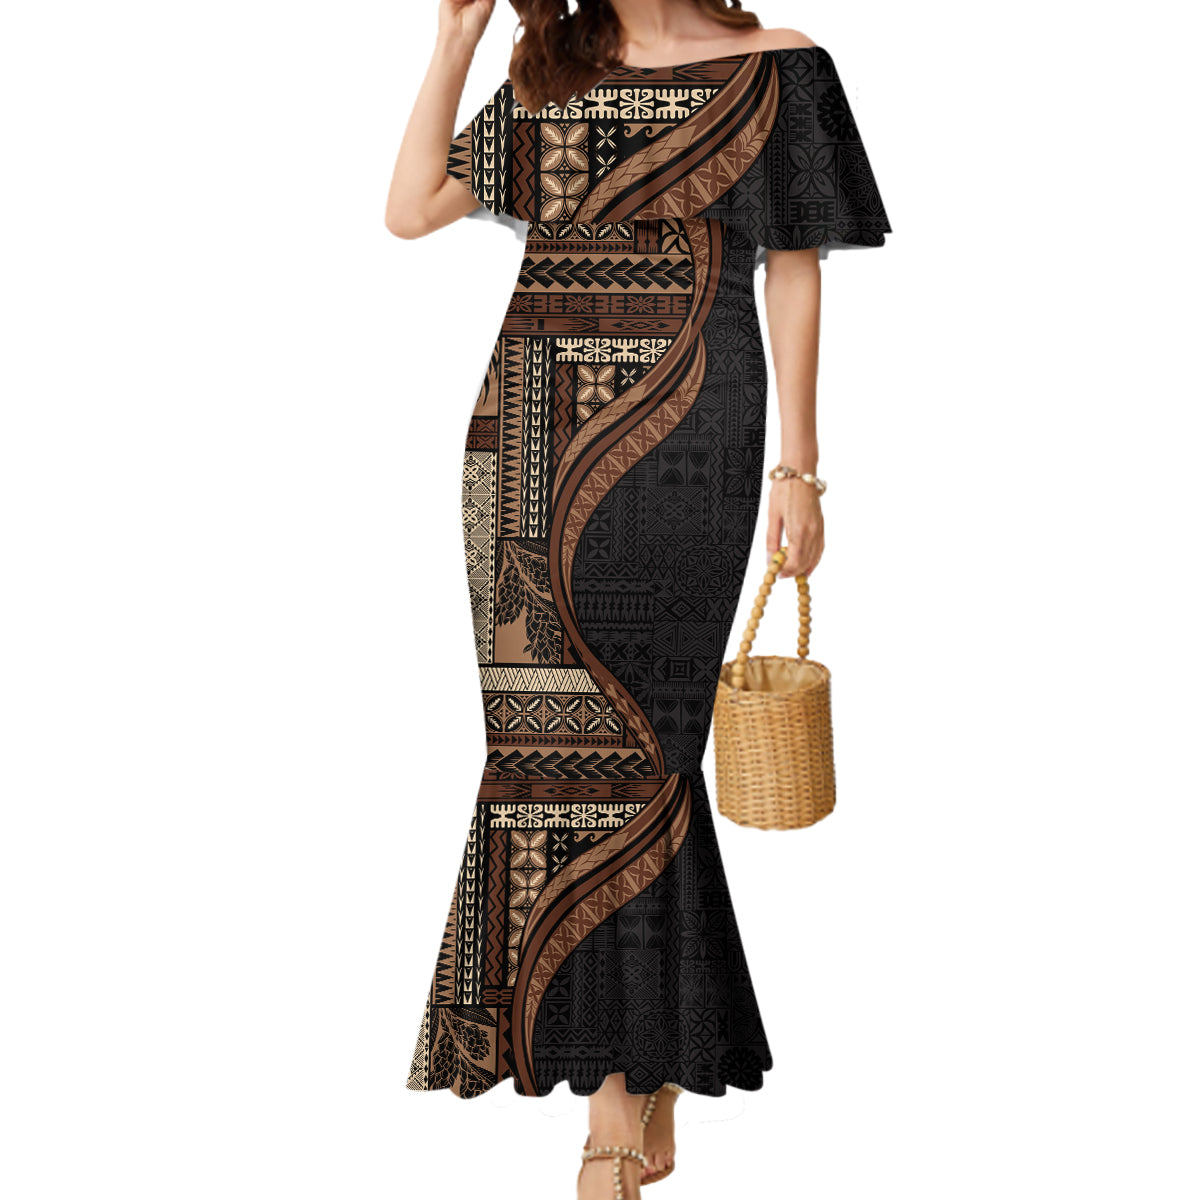 Samoa Siapo Motif and Tapa Pattern Half Style Mermaid Dress Black Color